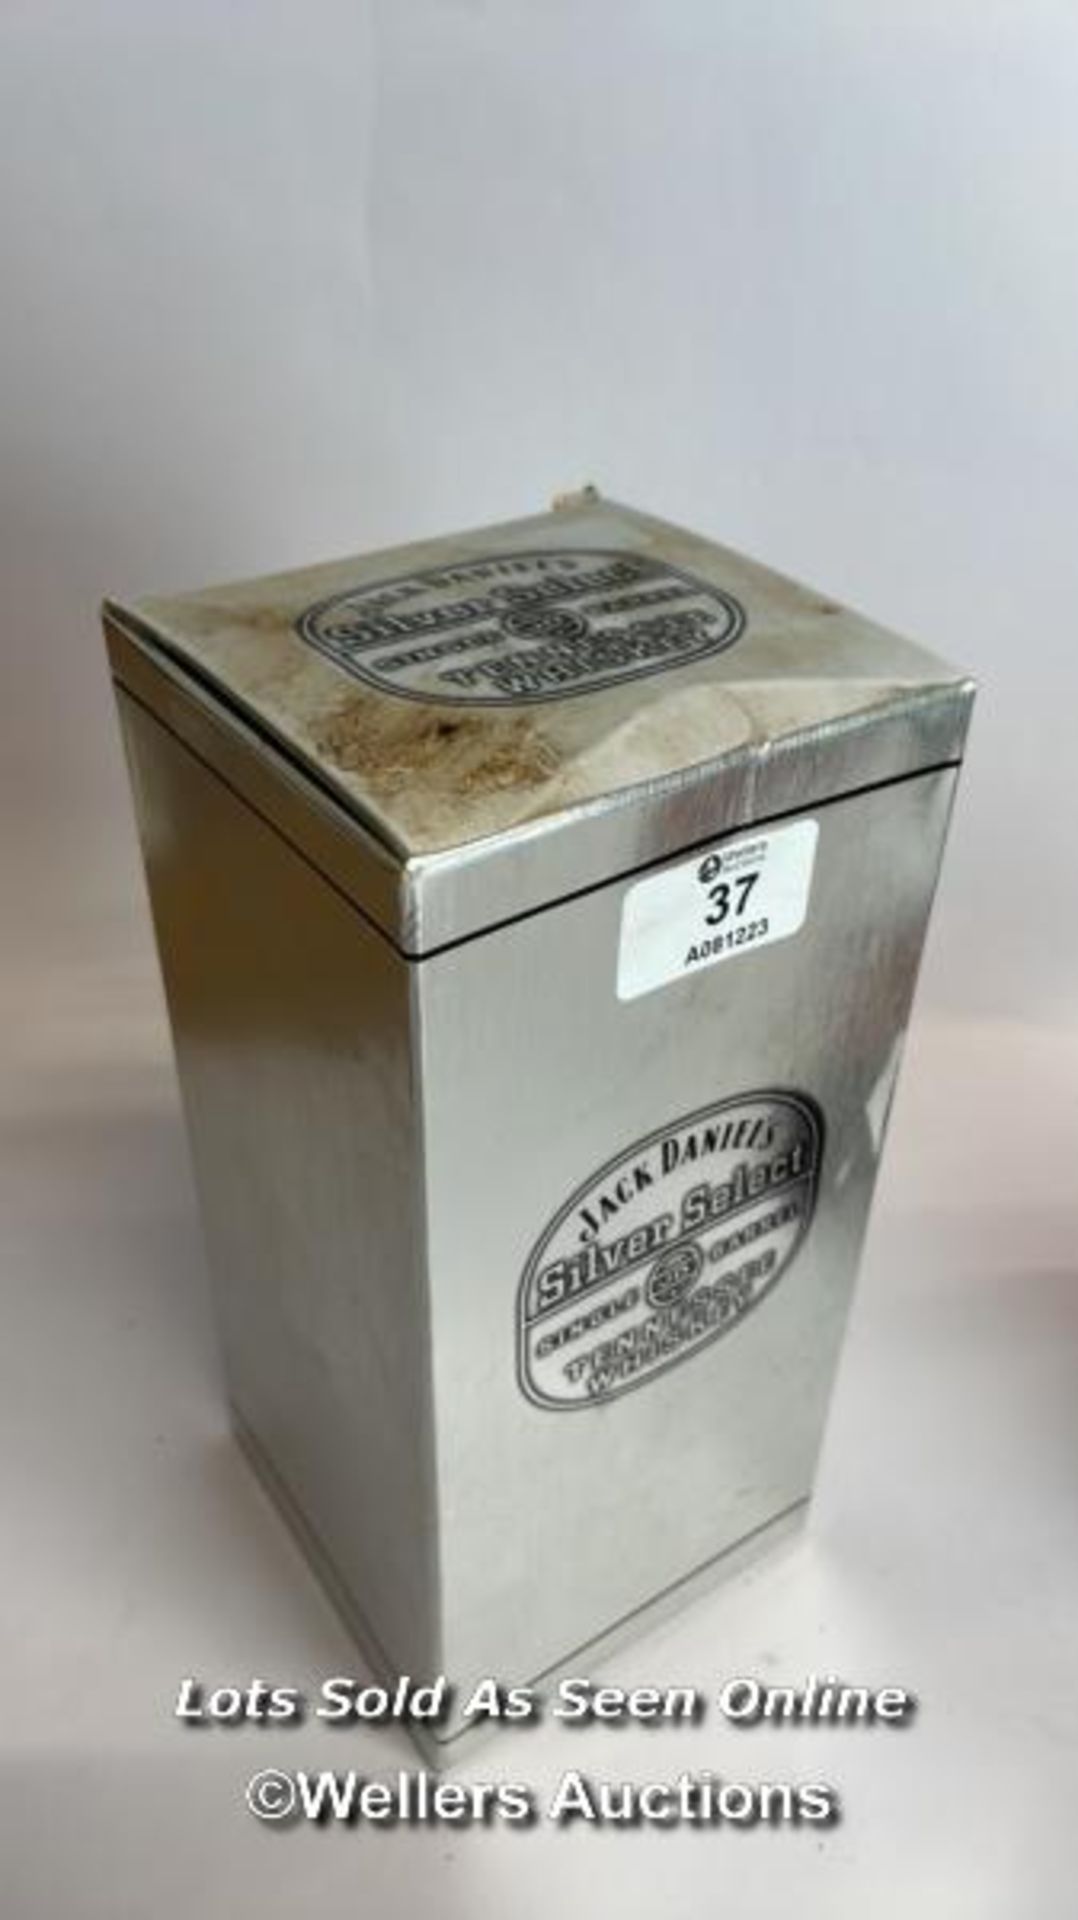 Jack Daniels Silver Select Single Barrel Tennessee Whiskey, Release date: 11-03-99, Barrek no: 9- - Image 8 of 8